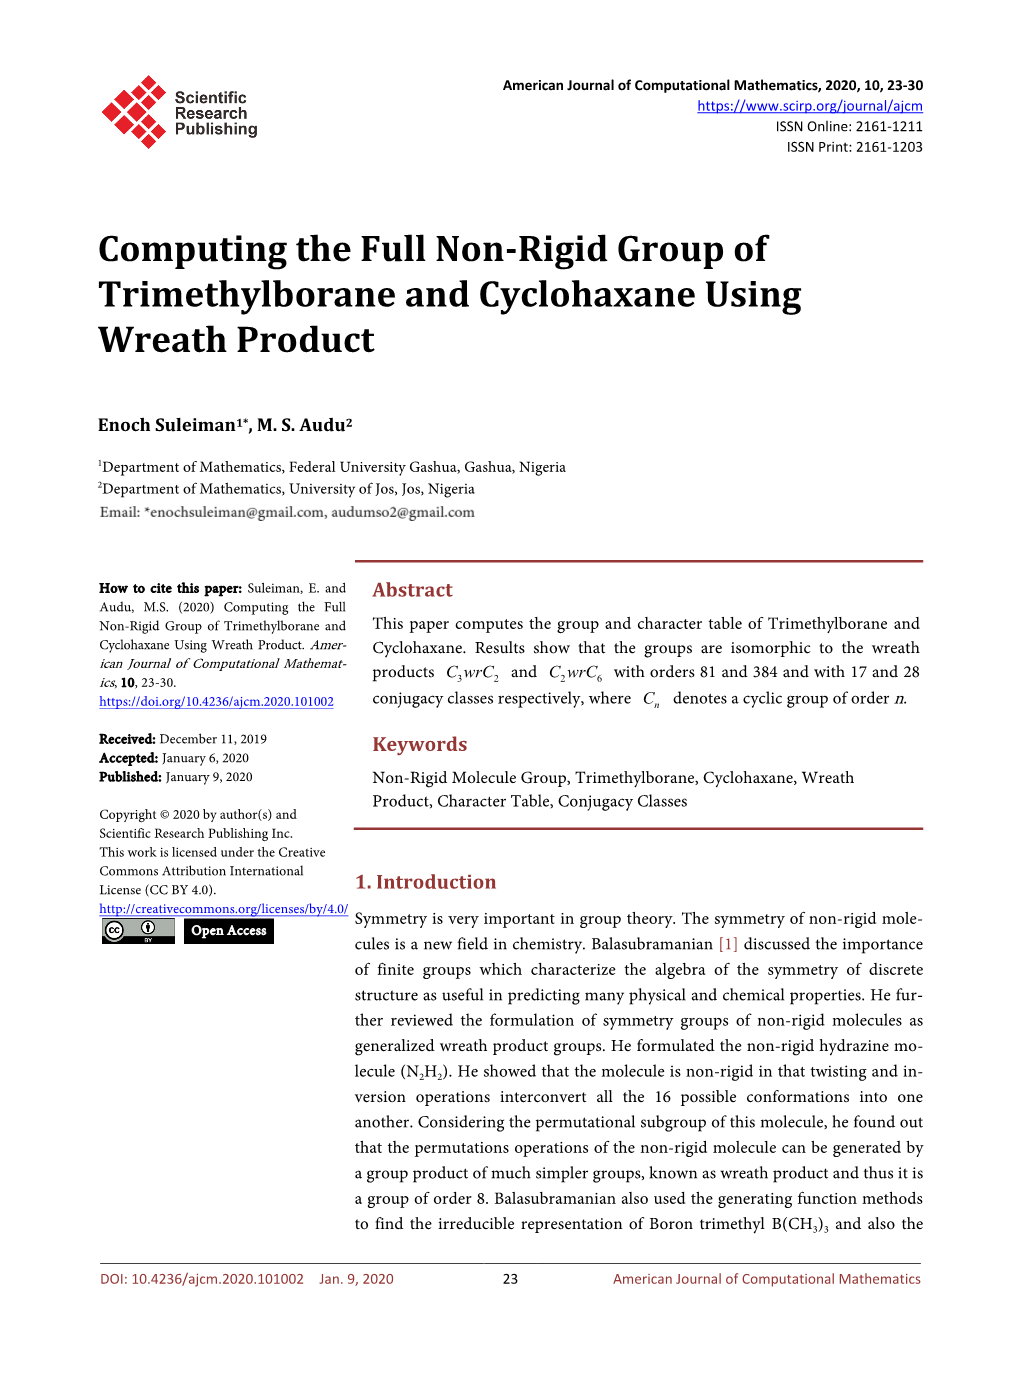 Computing the Full Non-Rigid Group of Trimethylborane and Cyclohaxane Using Wreath Product